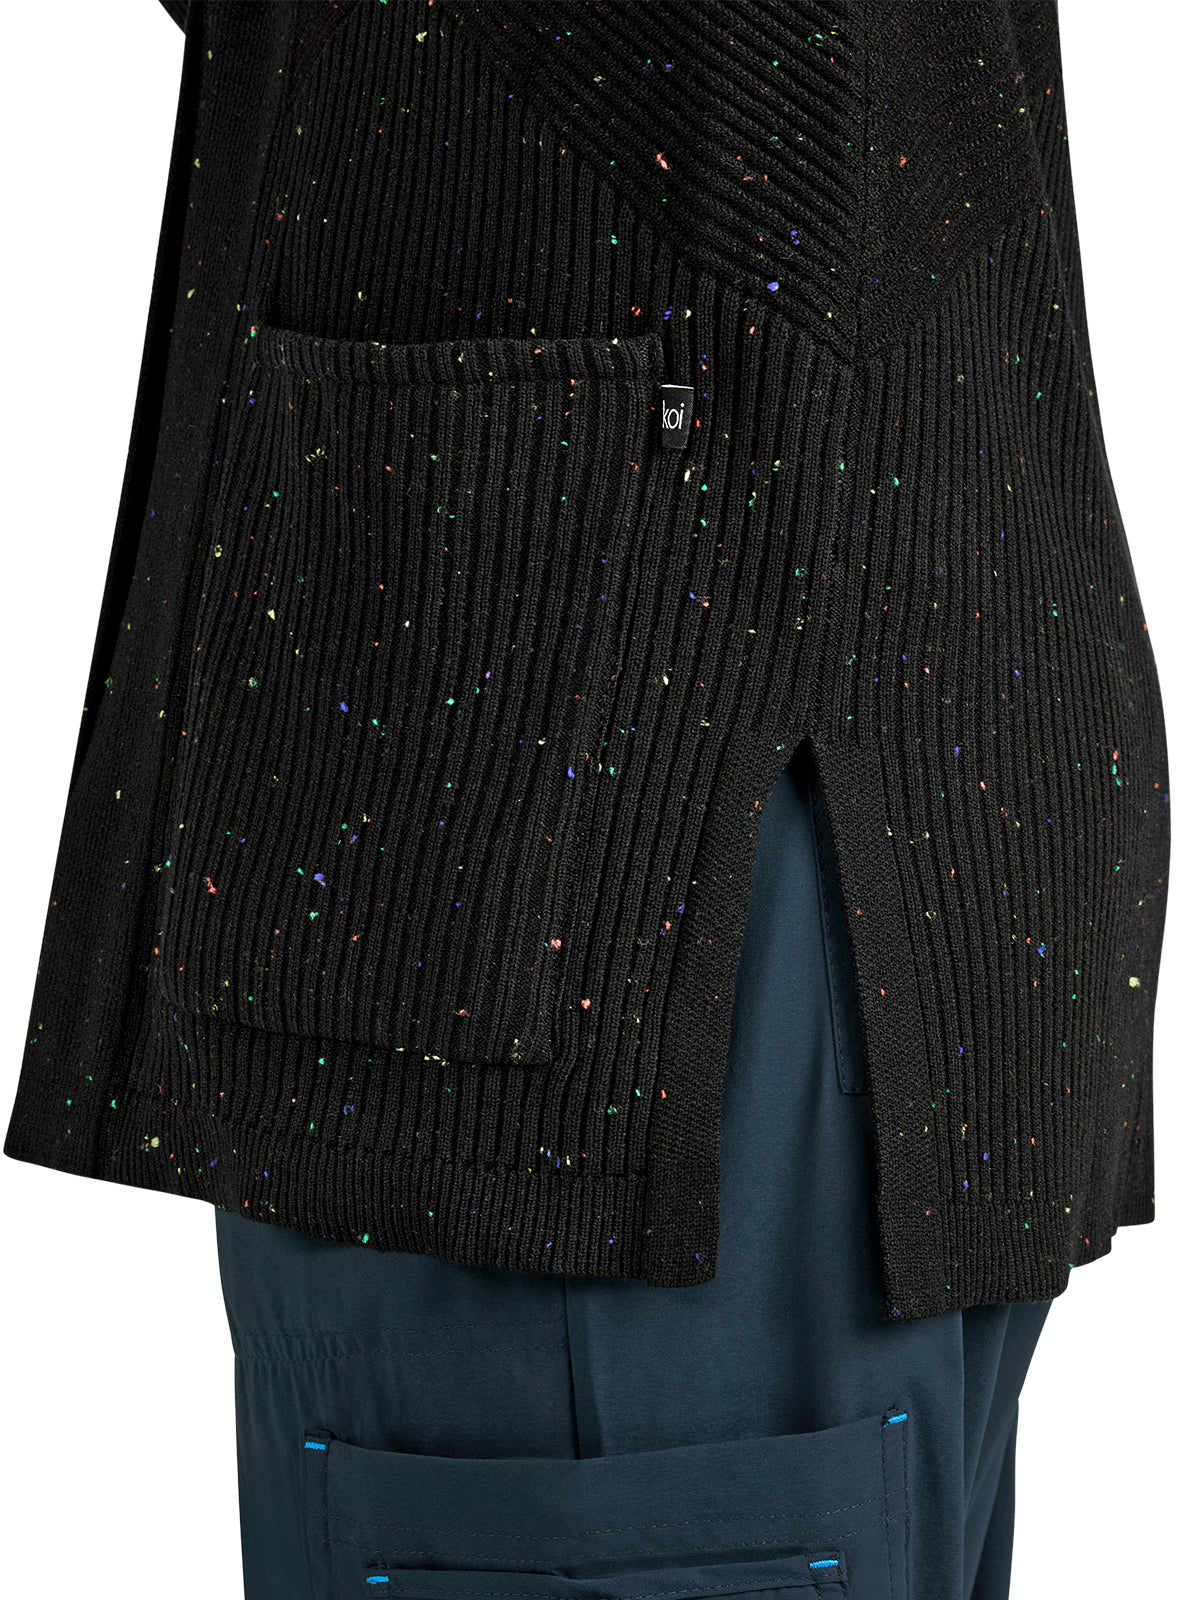 Women's Geometric Knit Kori Sweater